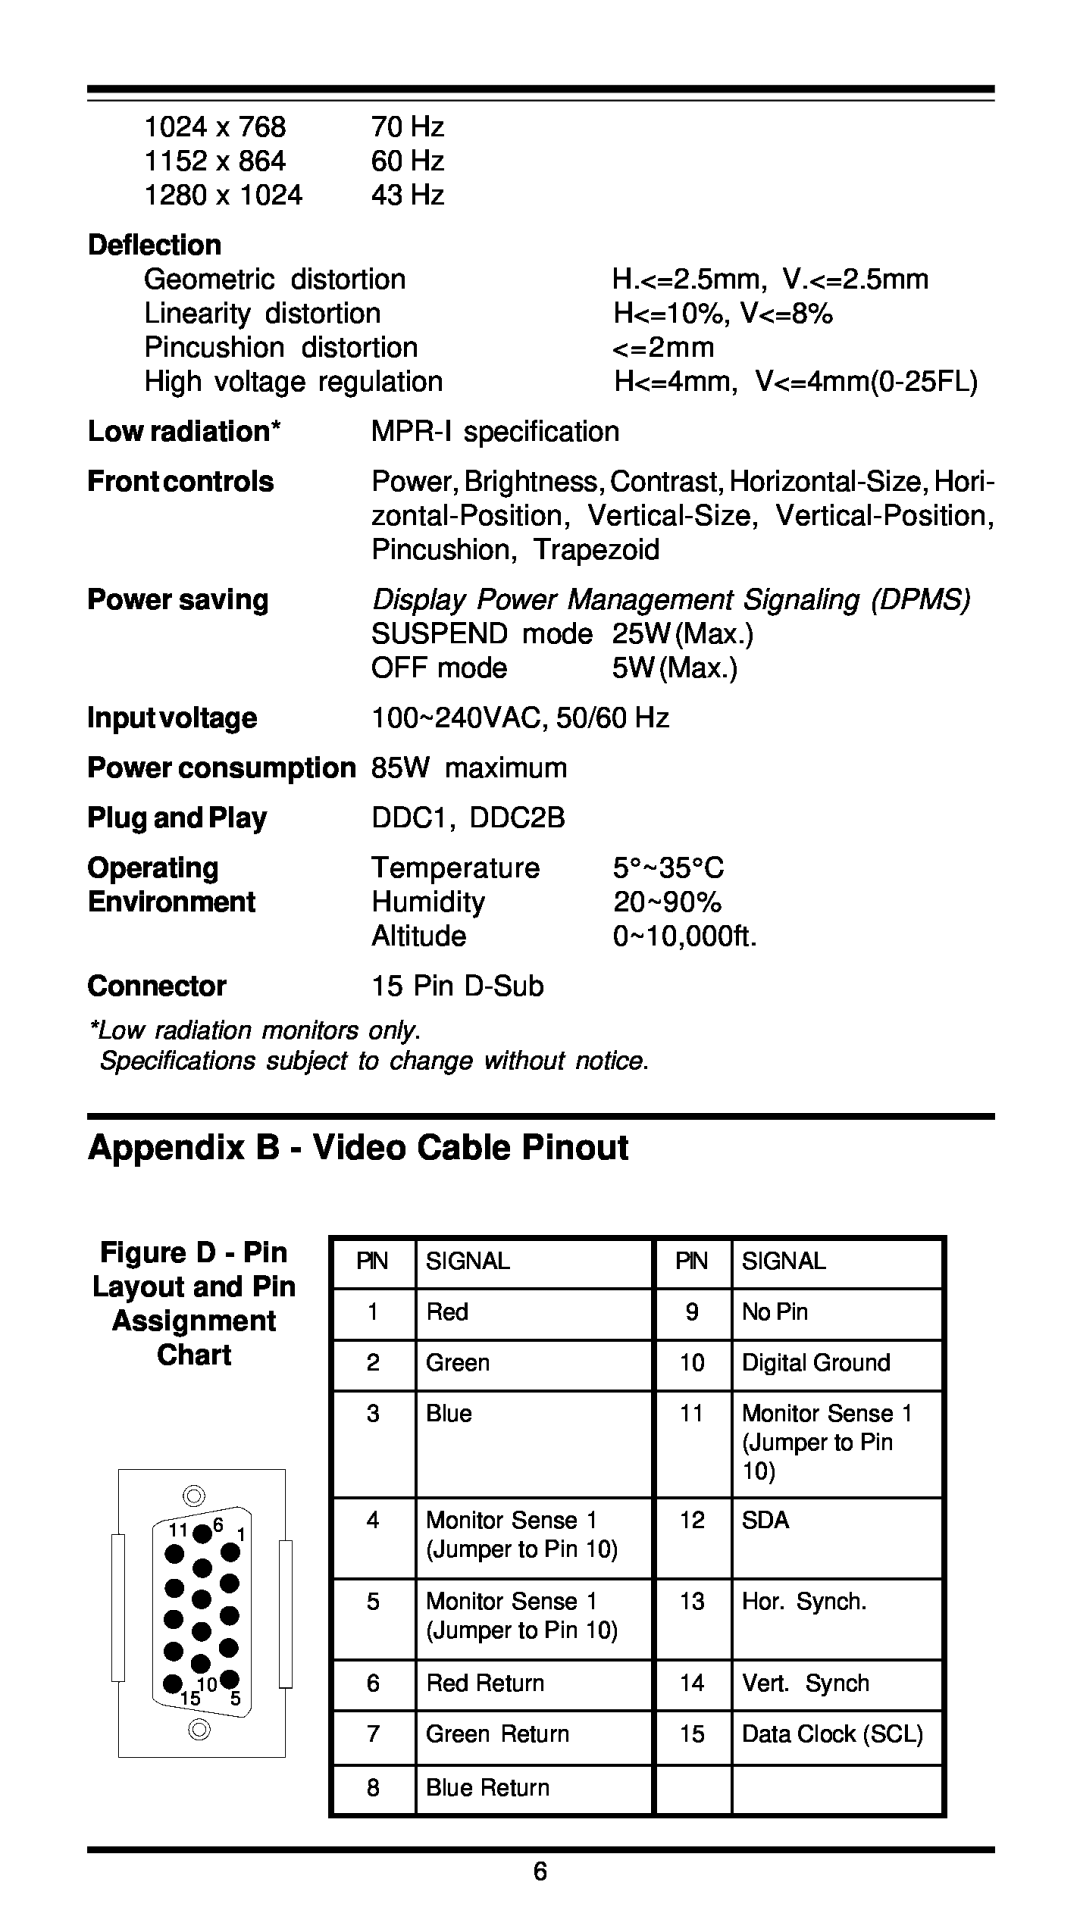 MaxTech XT4871 user manual Appendix B - Video Cable Pinout, Display Power Management Signaling DPMS 